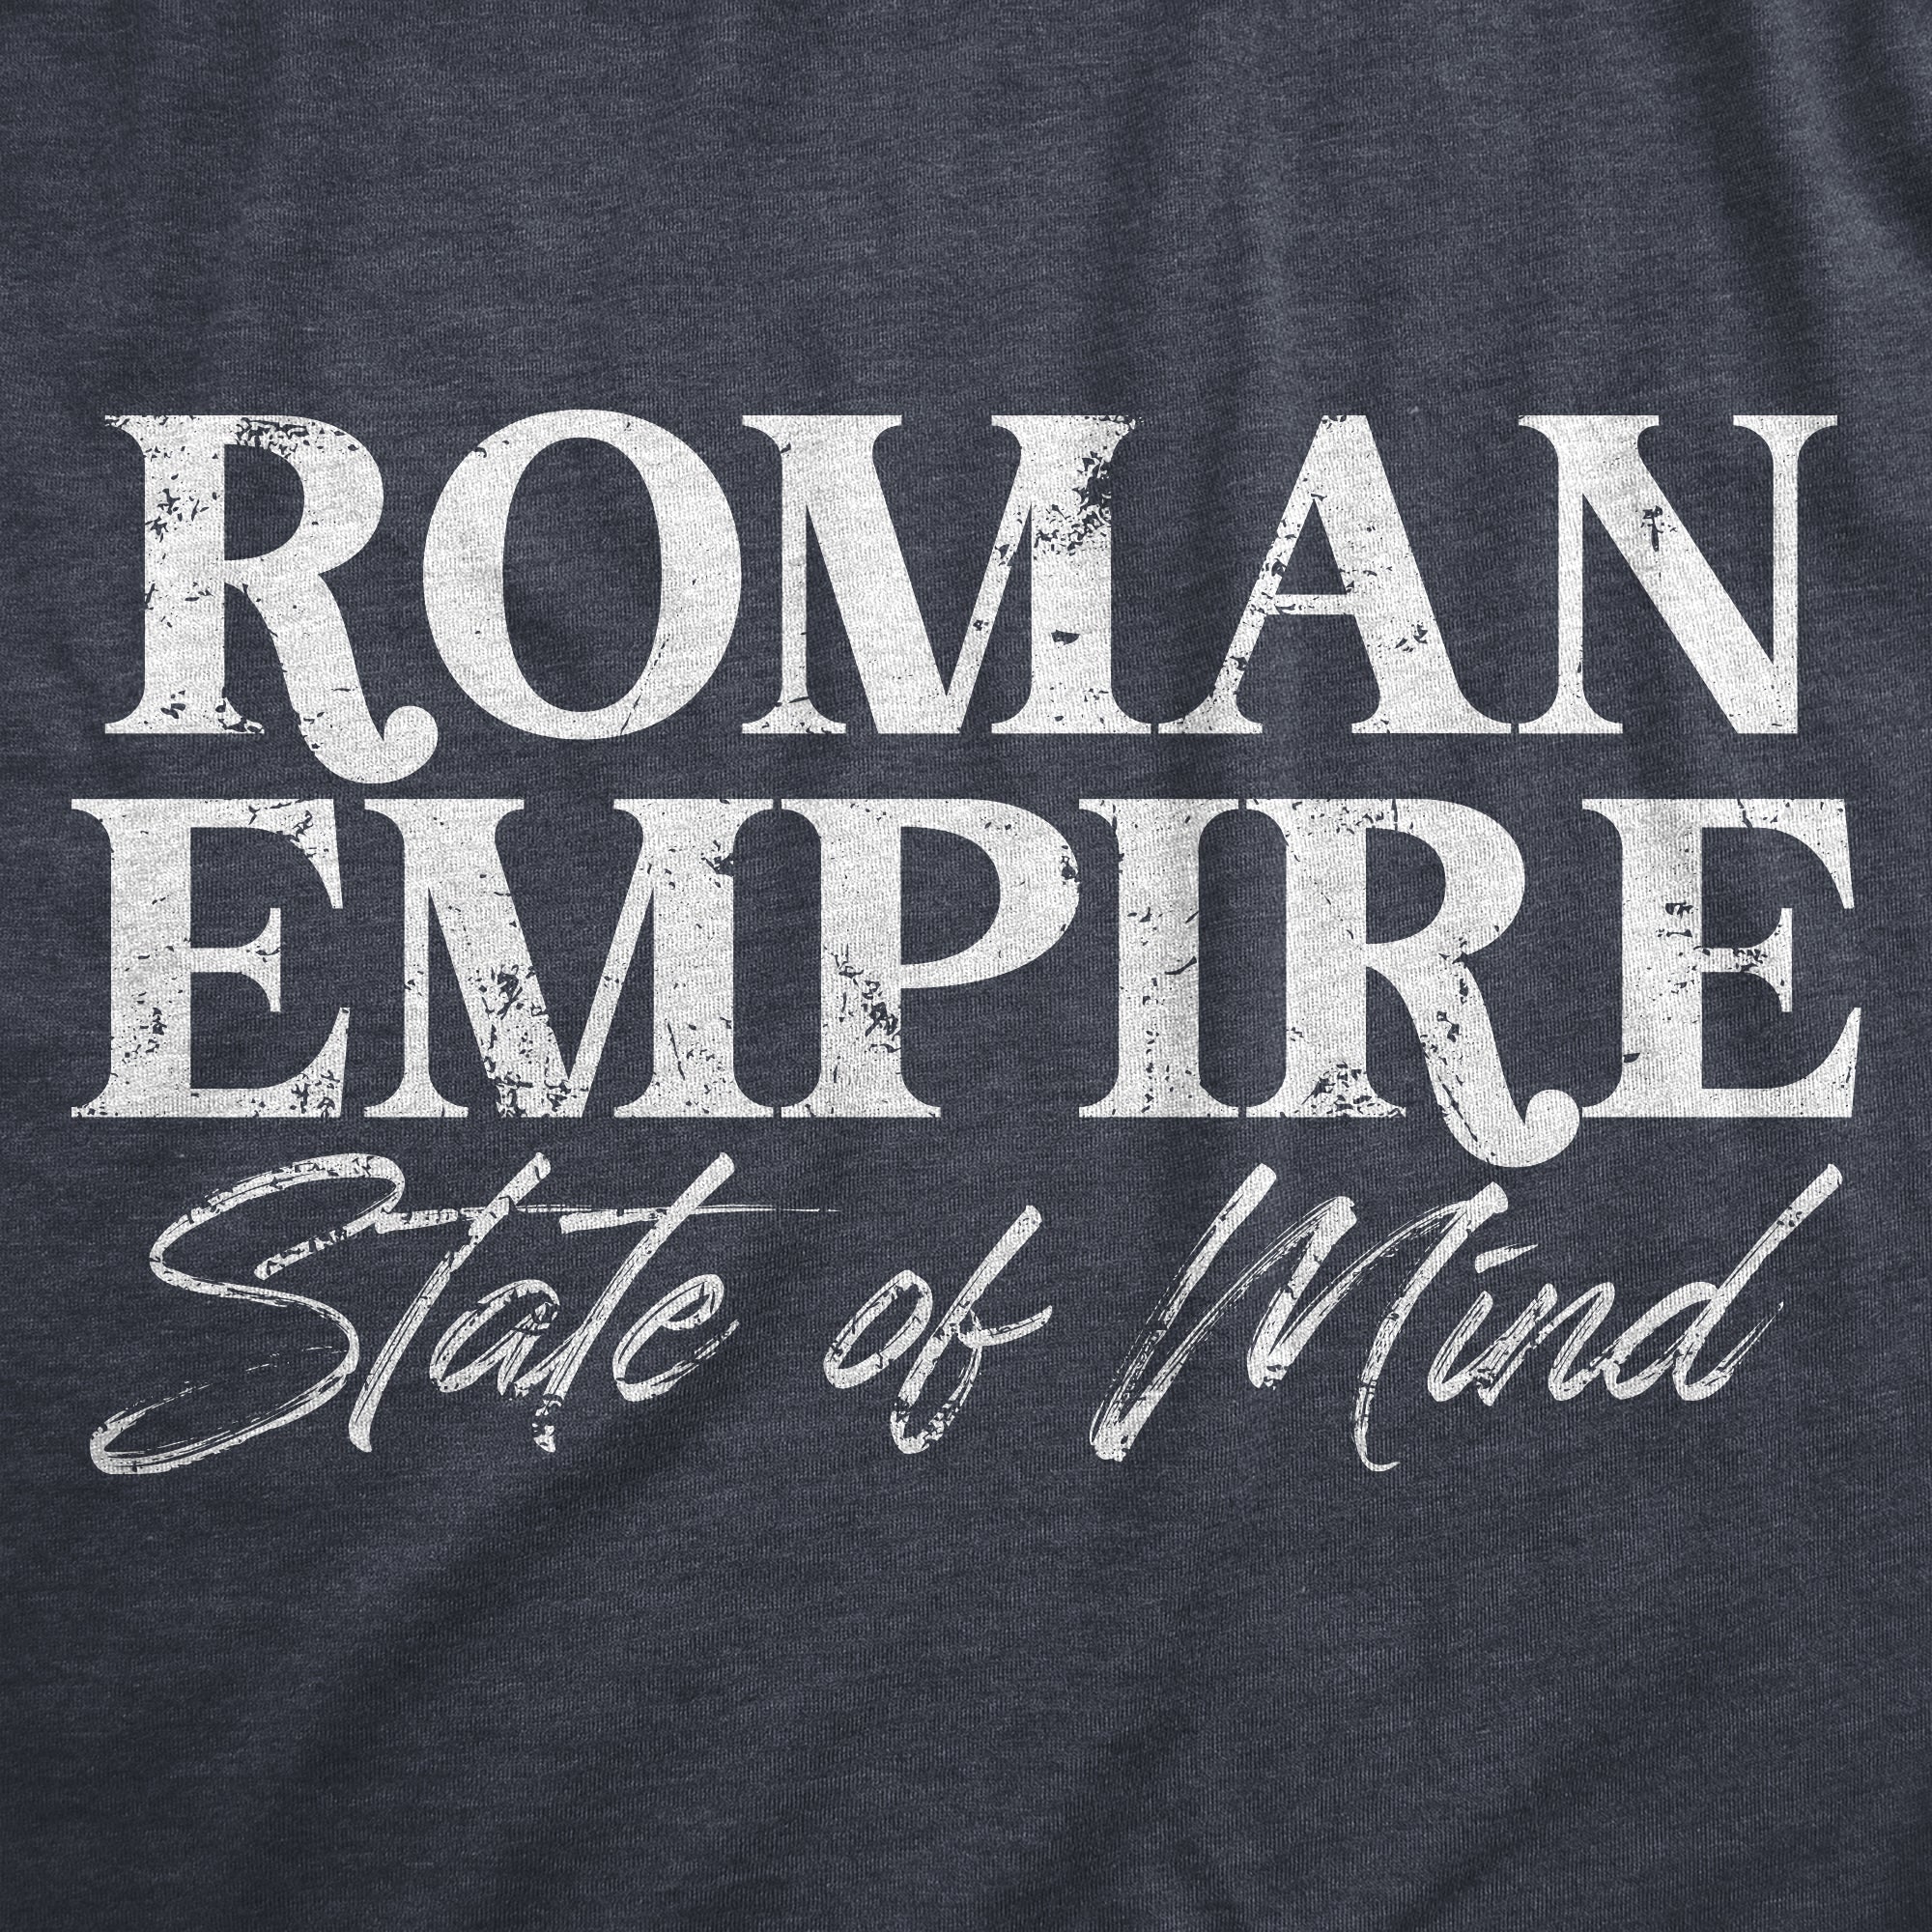 Funny Heather Navy - ROMAN Roman Empire State Of Mind Mens T Shirt Nerdy Internet sarcastic Tee